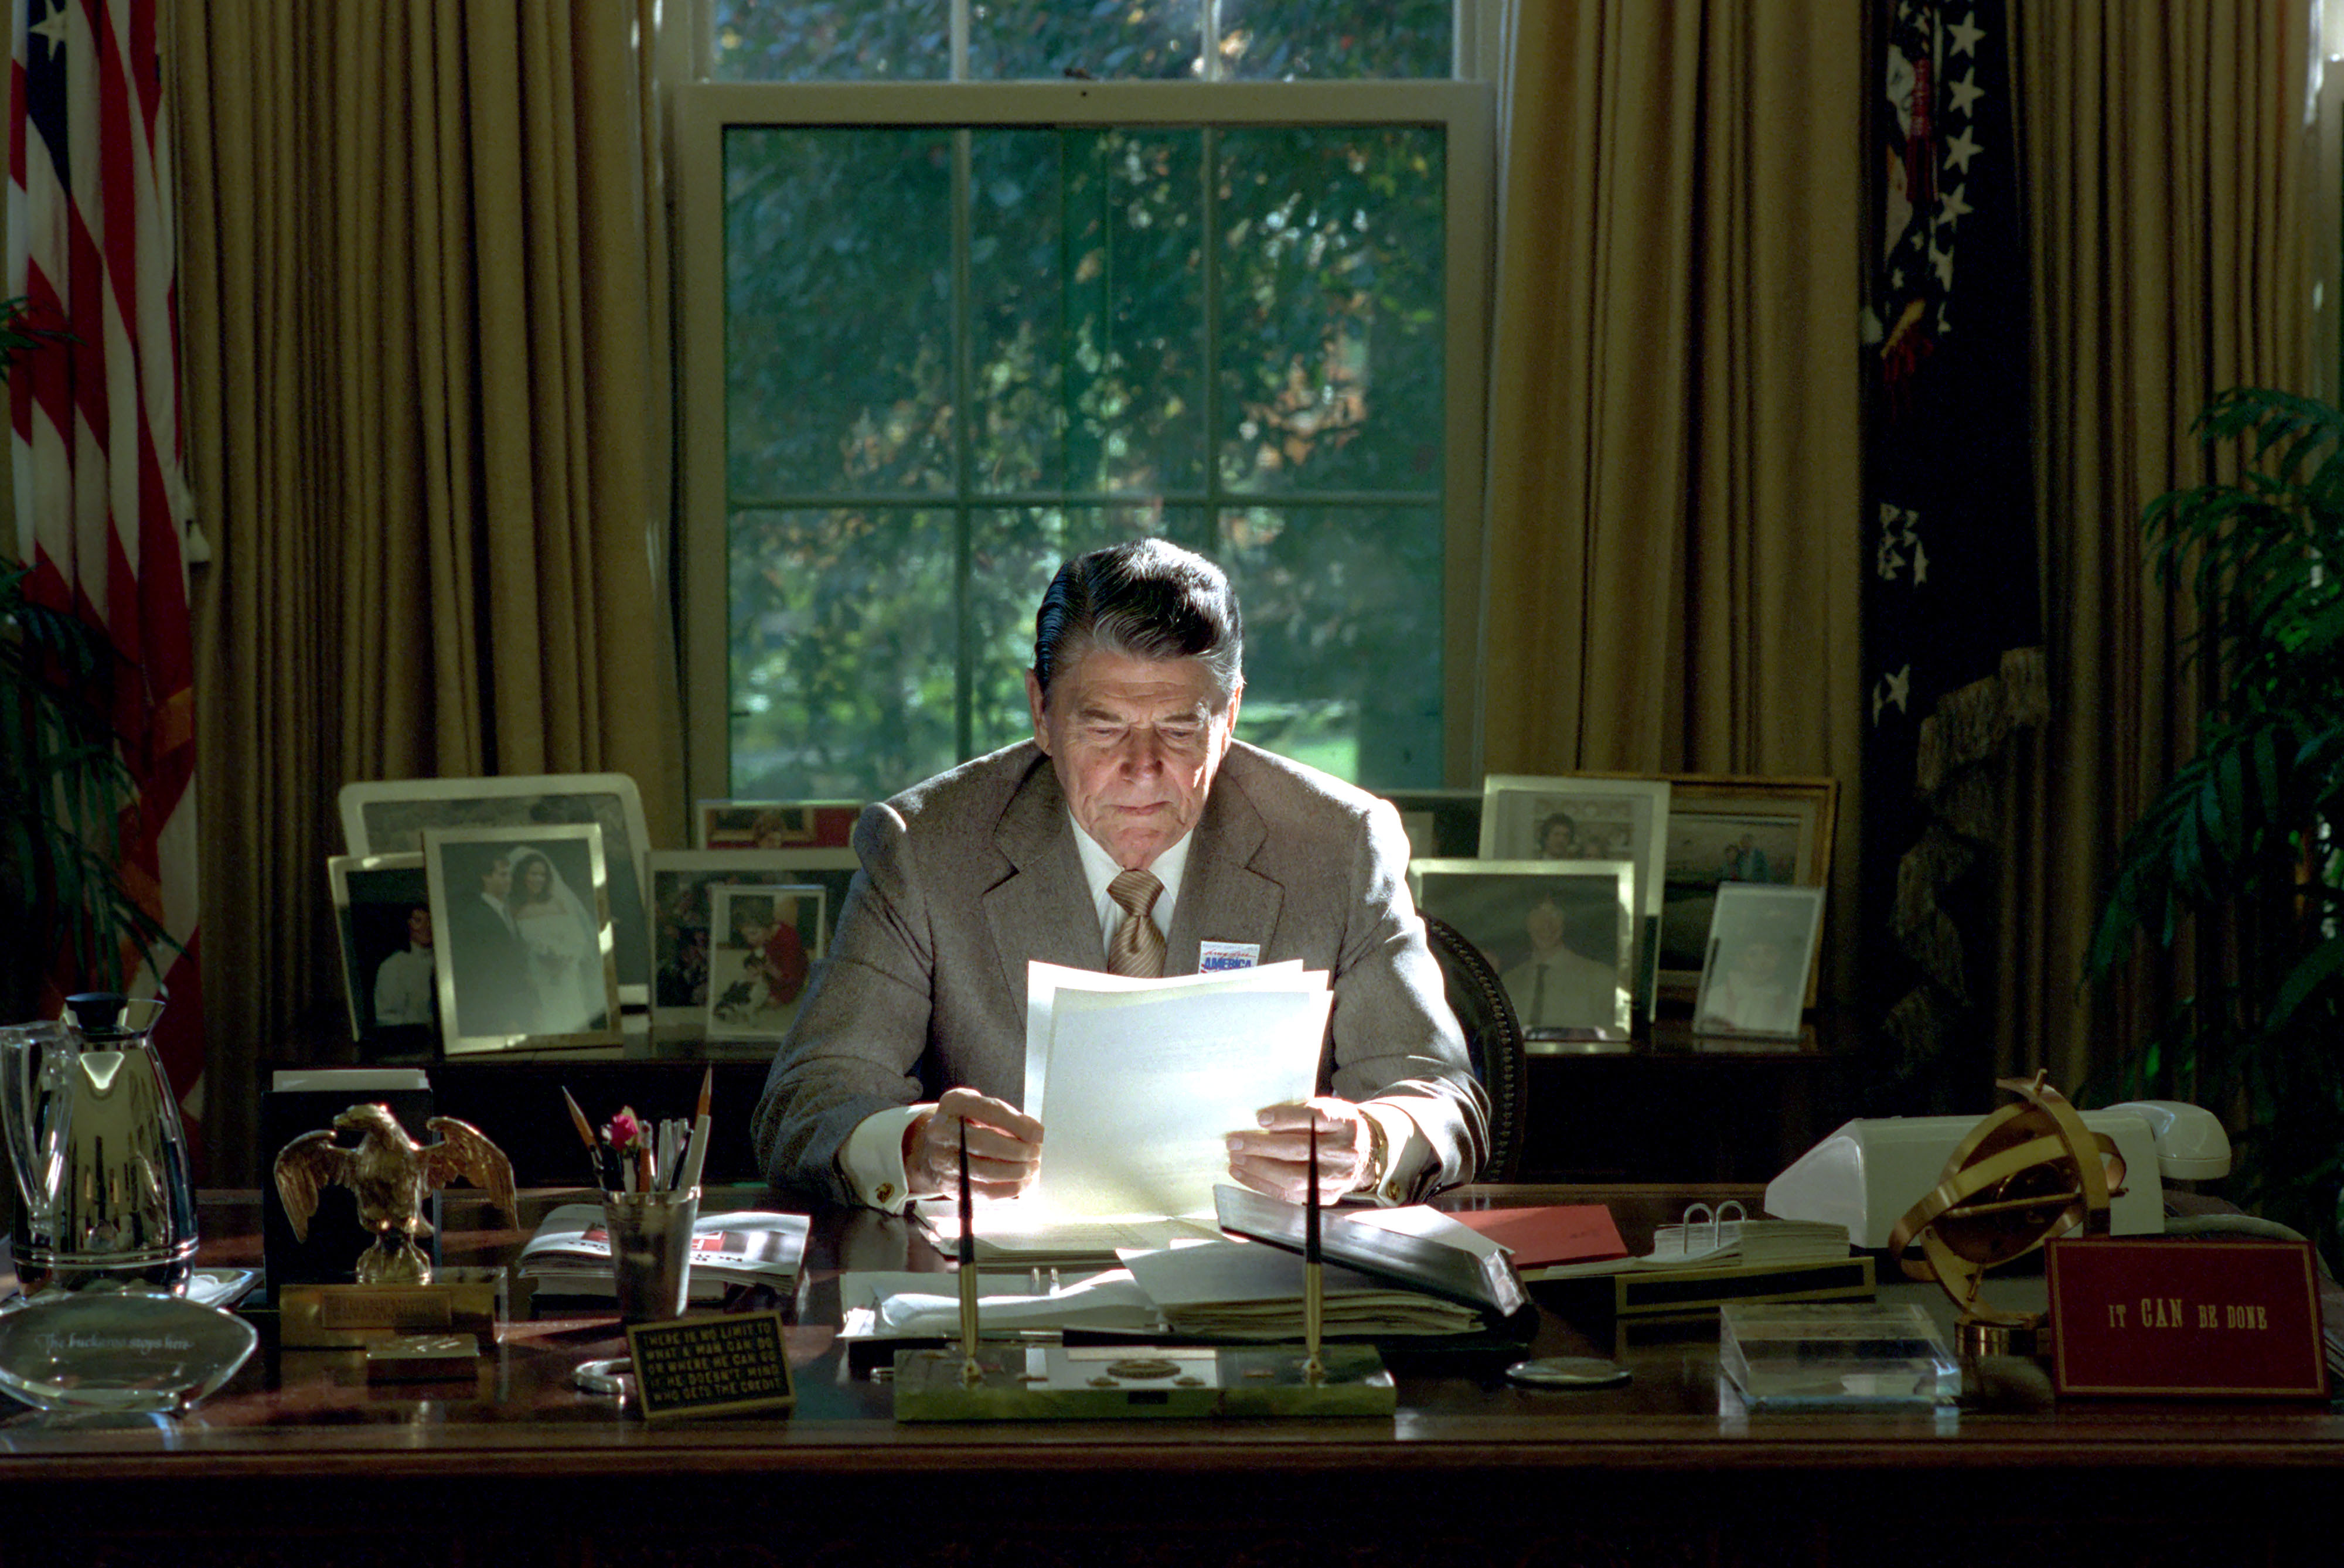 President Ronlad Regan Oval Office Color 8x10 Photograph